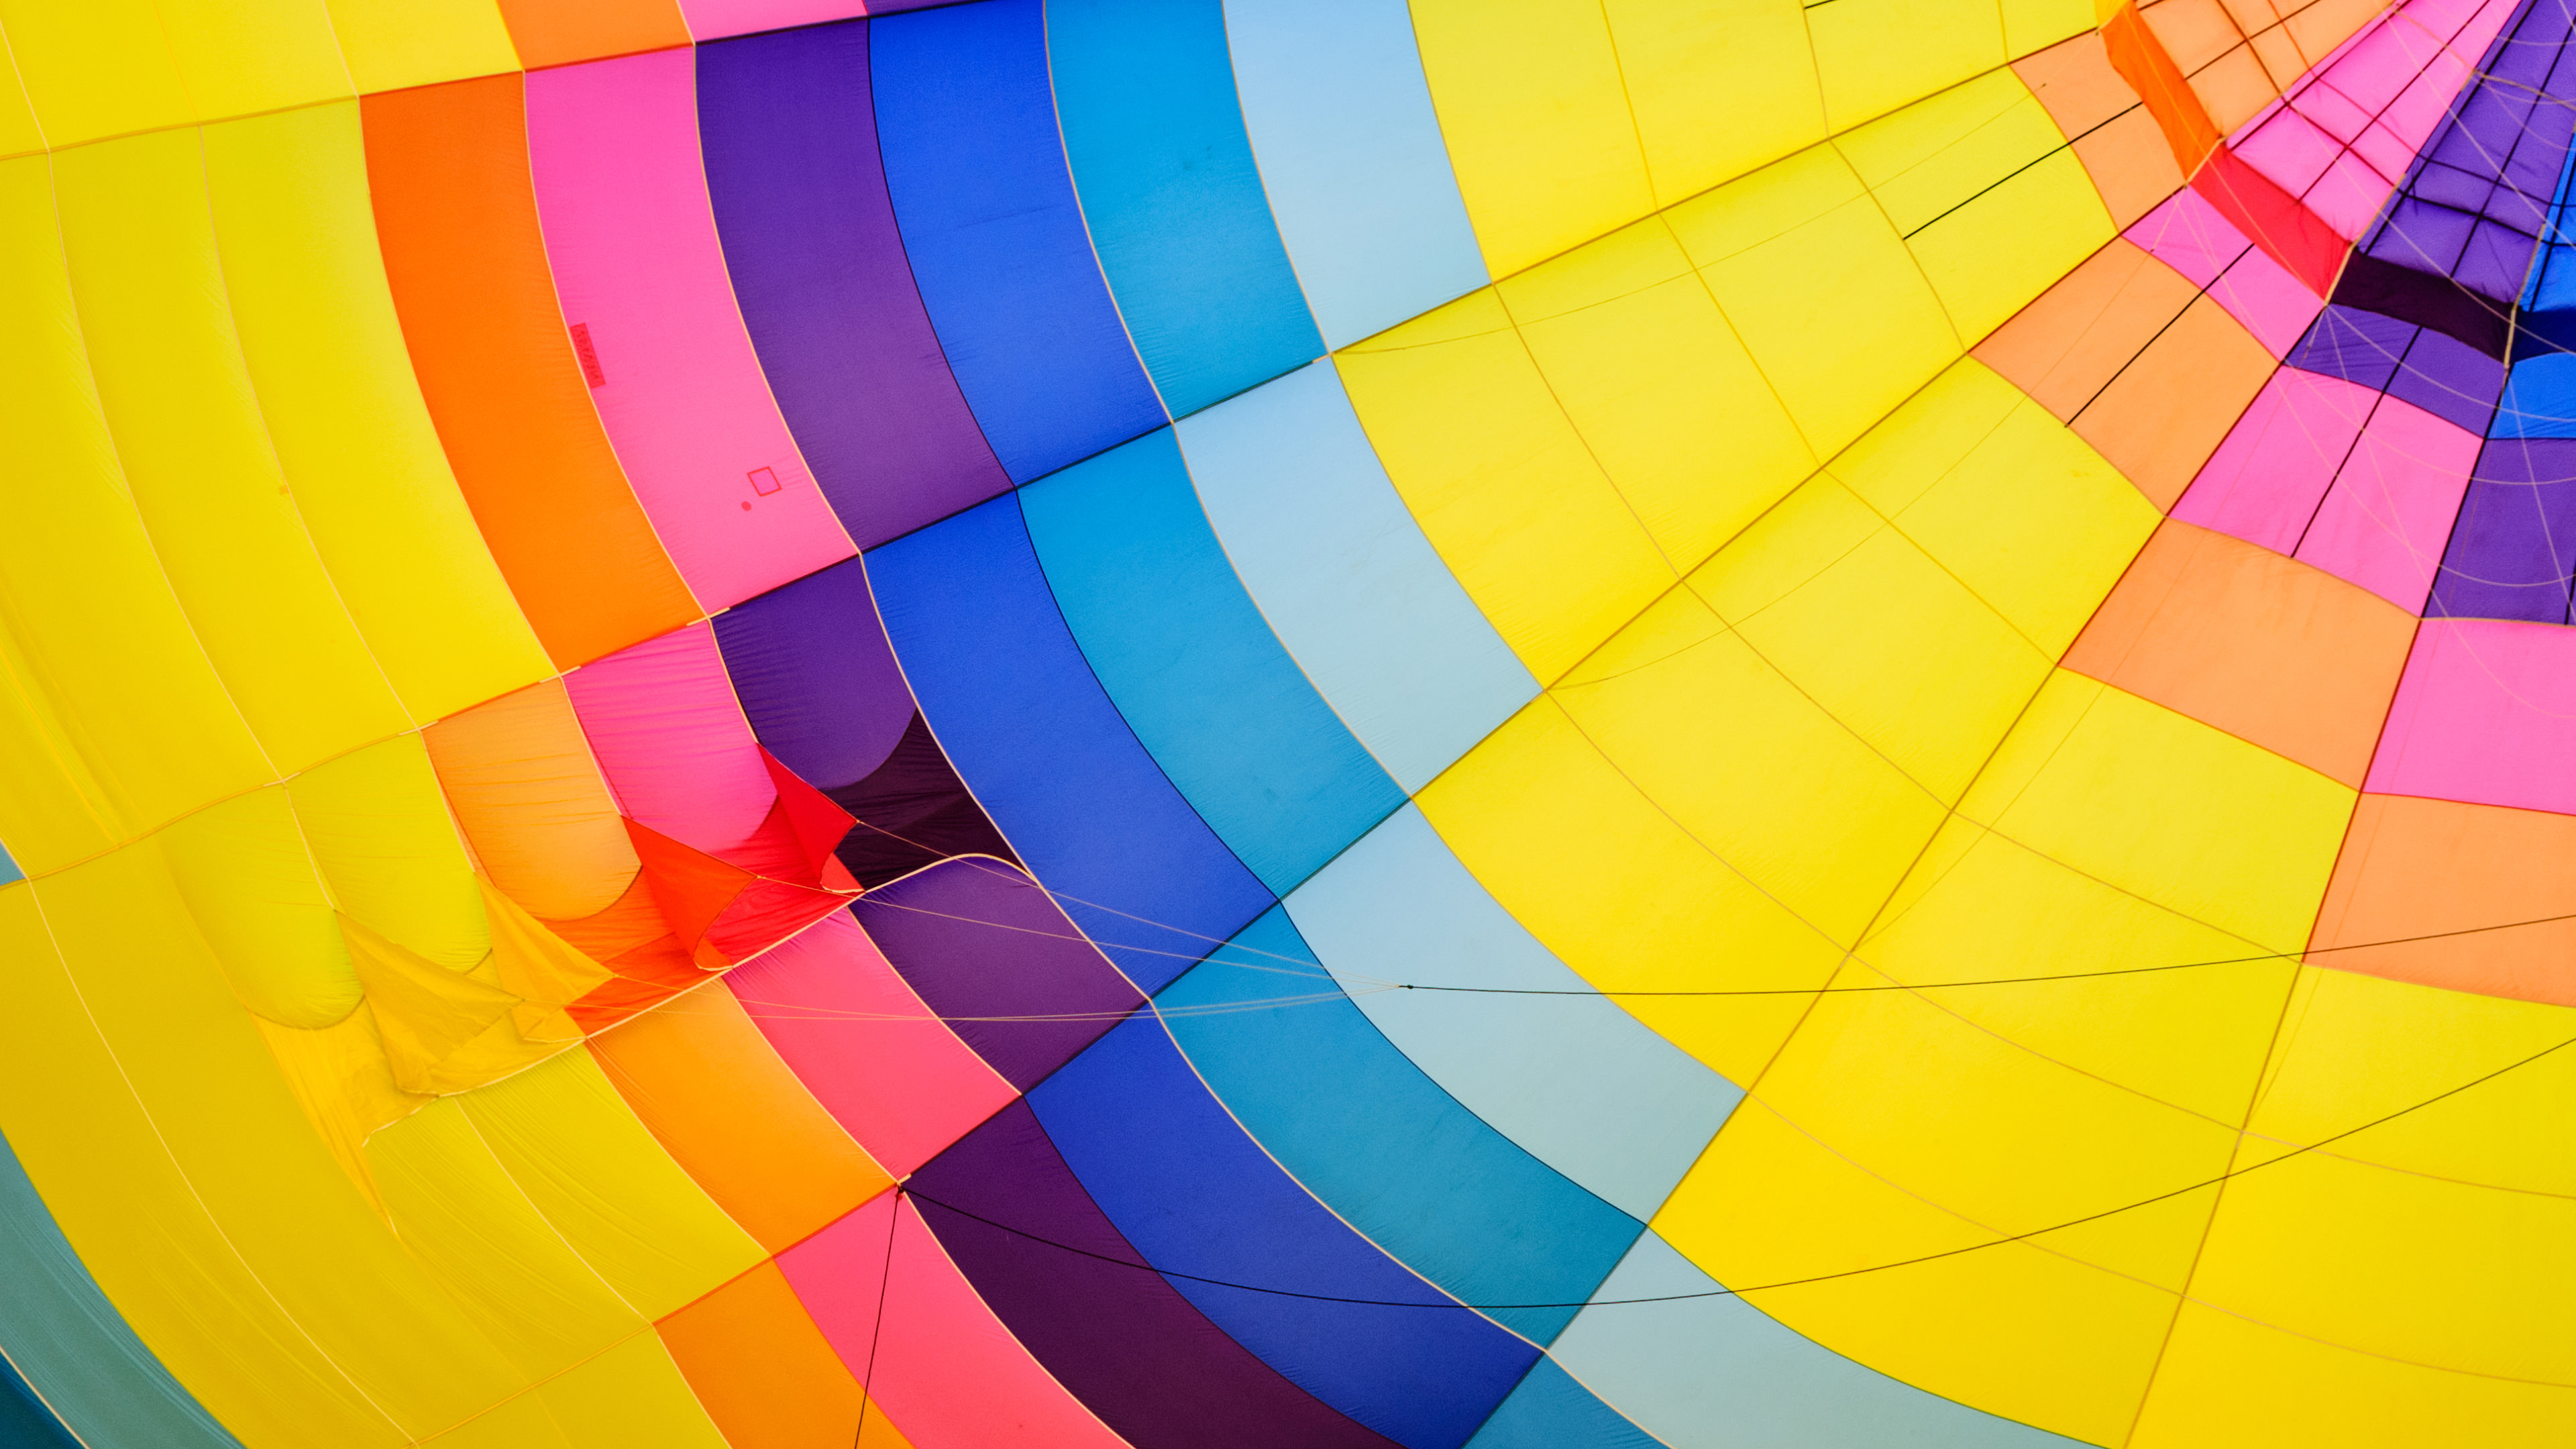 Colorful Hot Air Balloon 4K